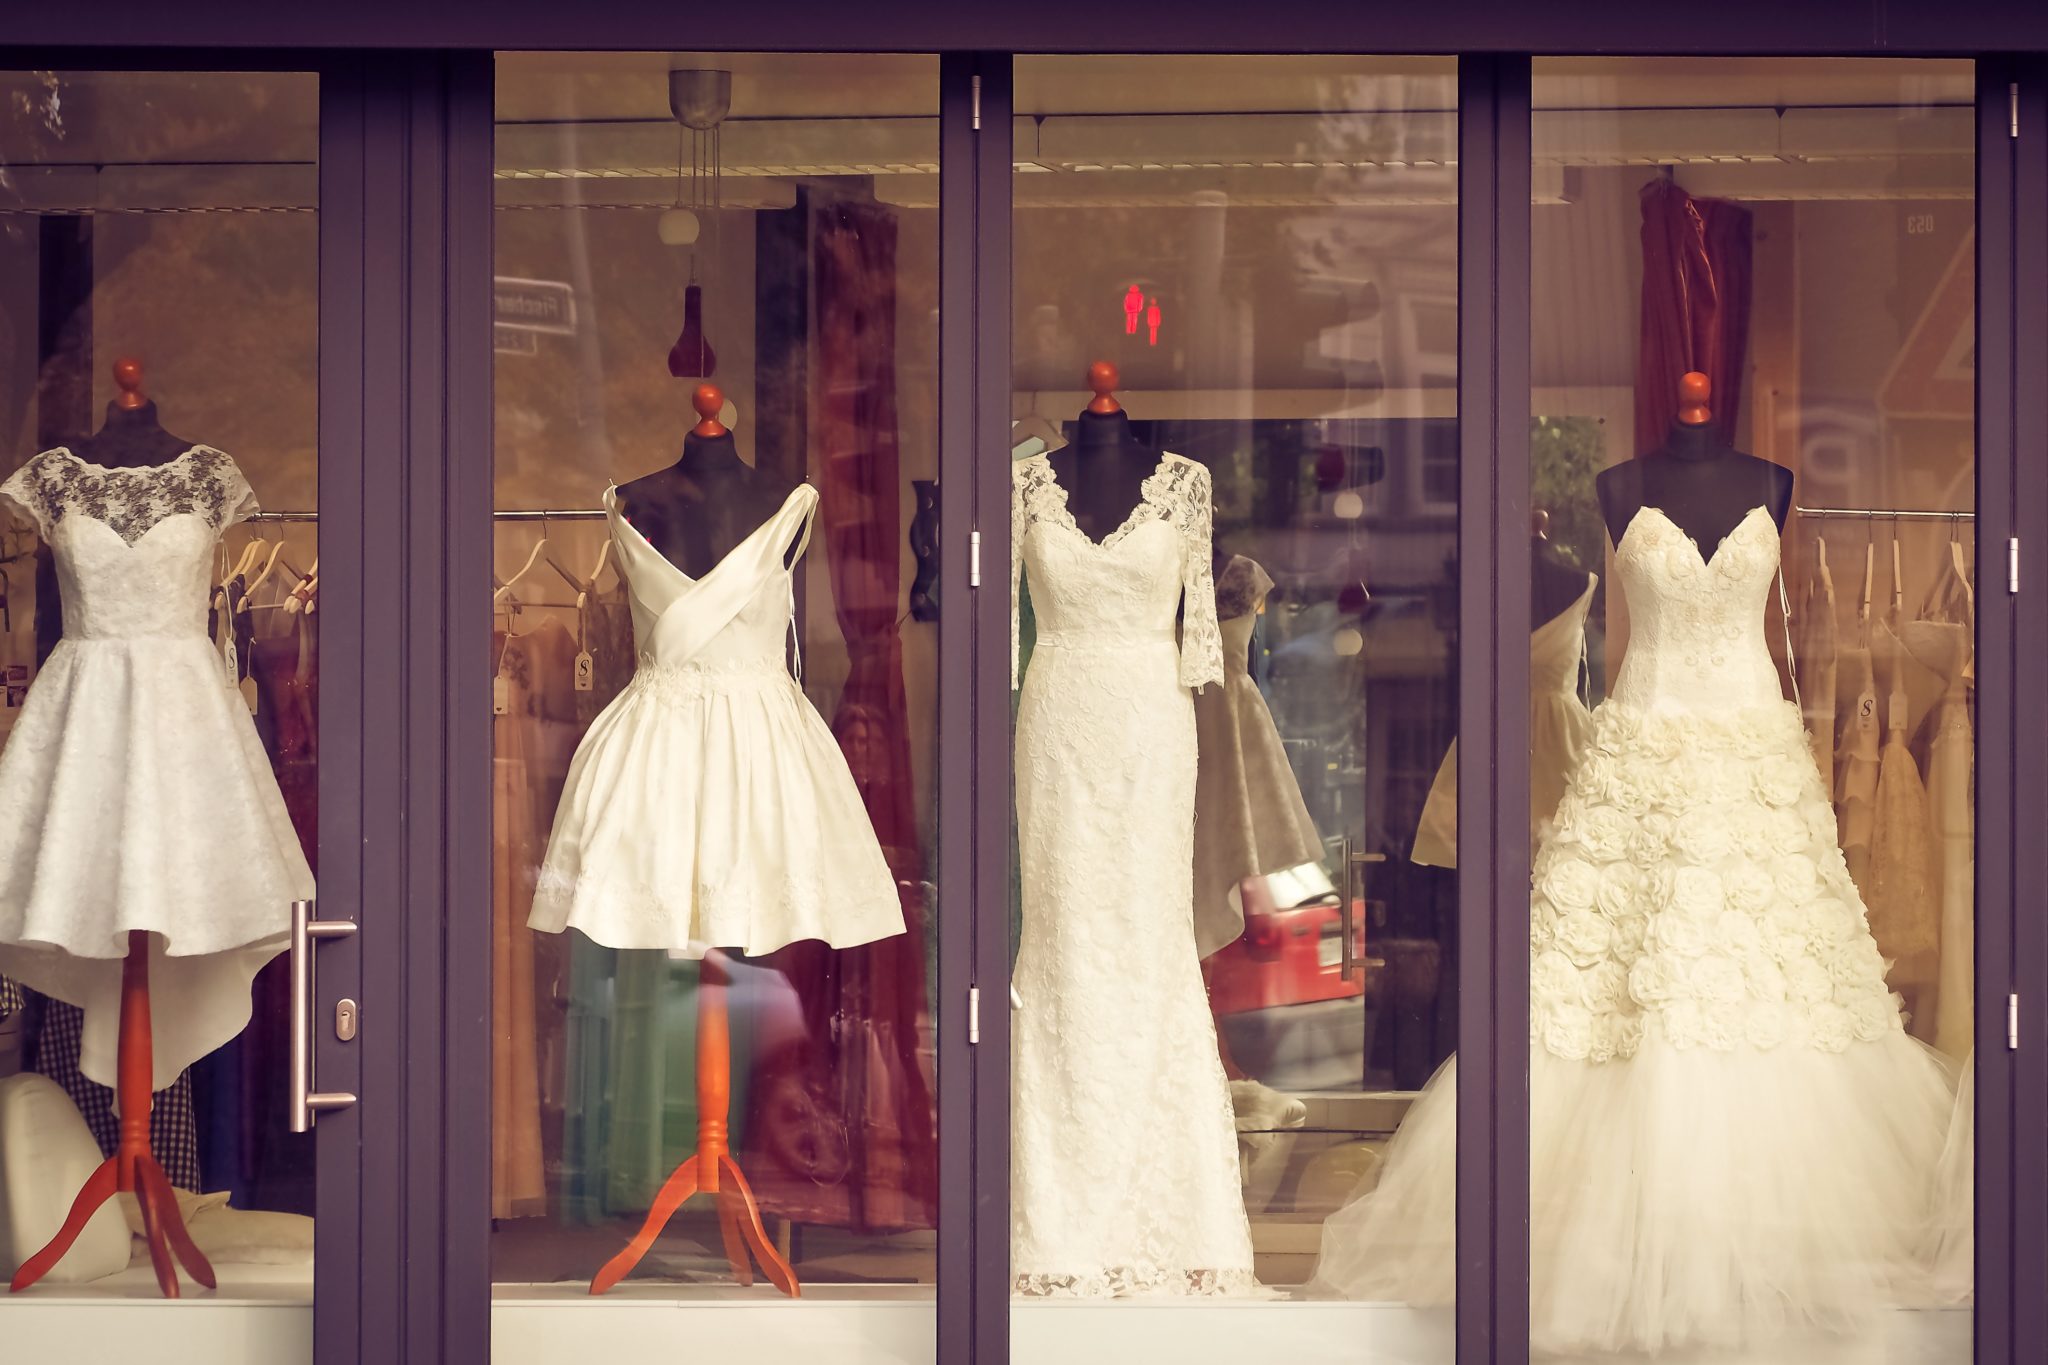 Wedding dresses displayed in a shop window.